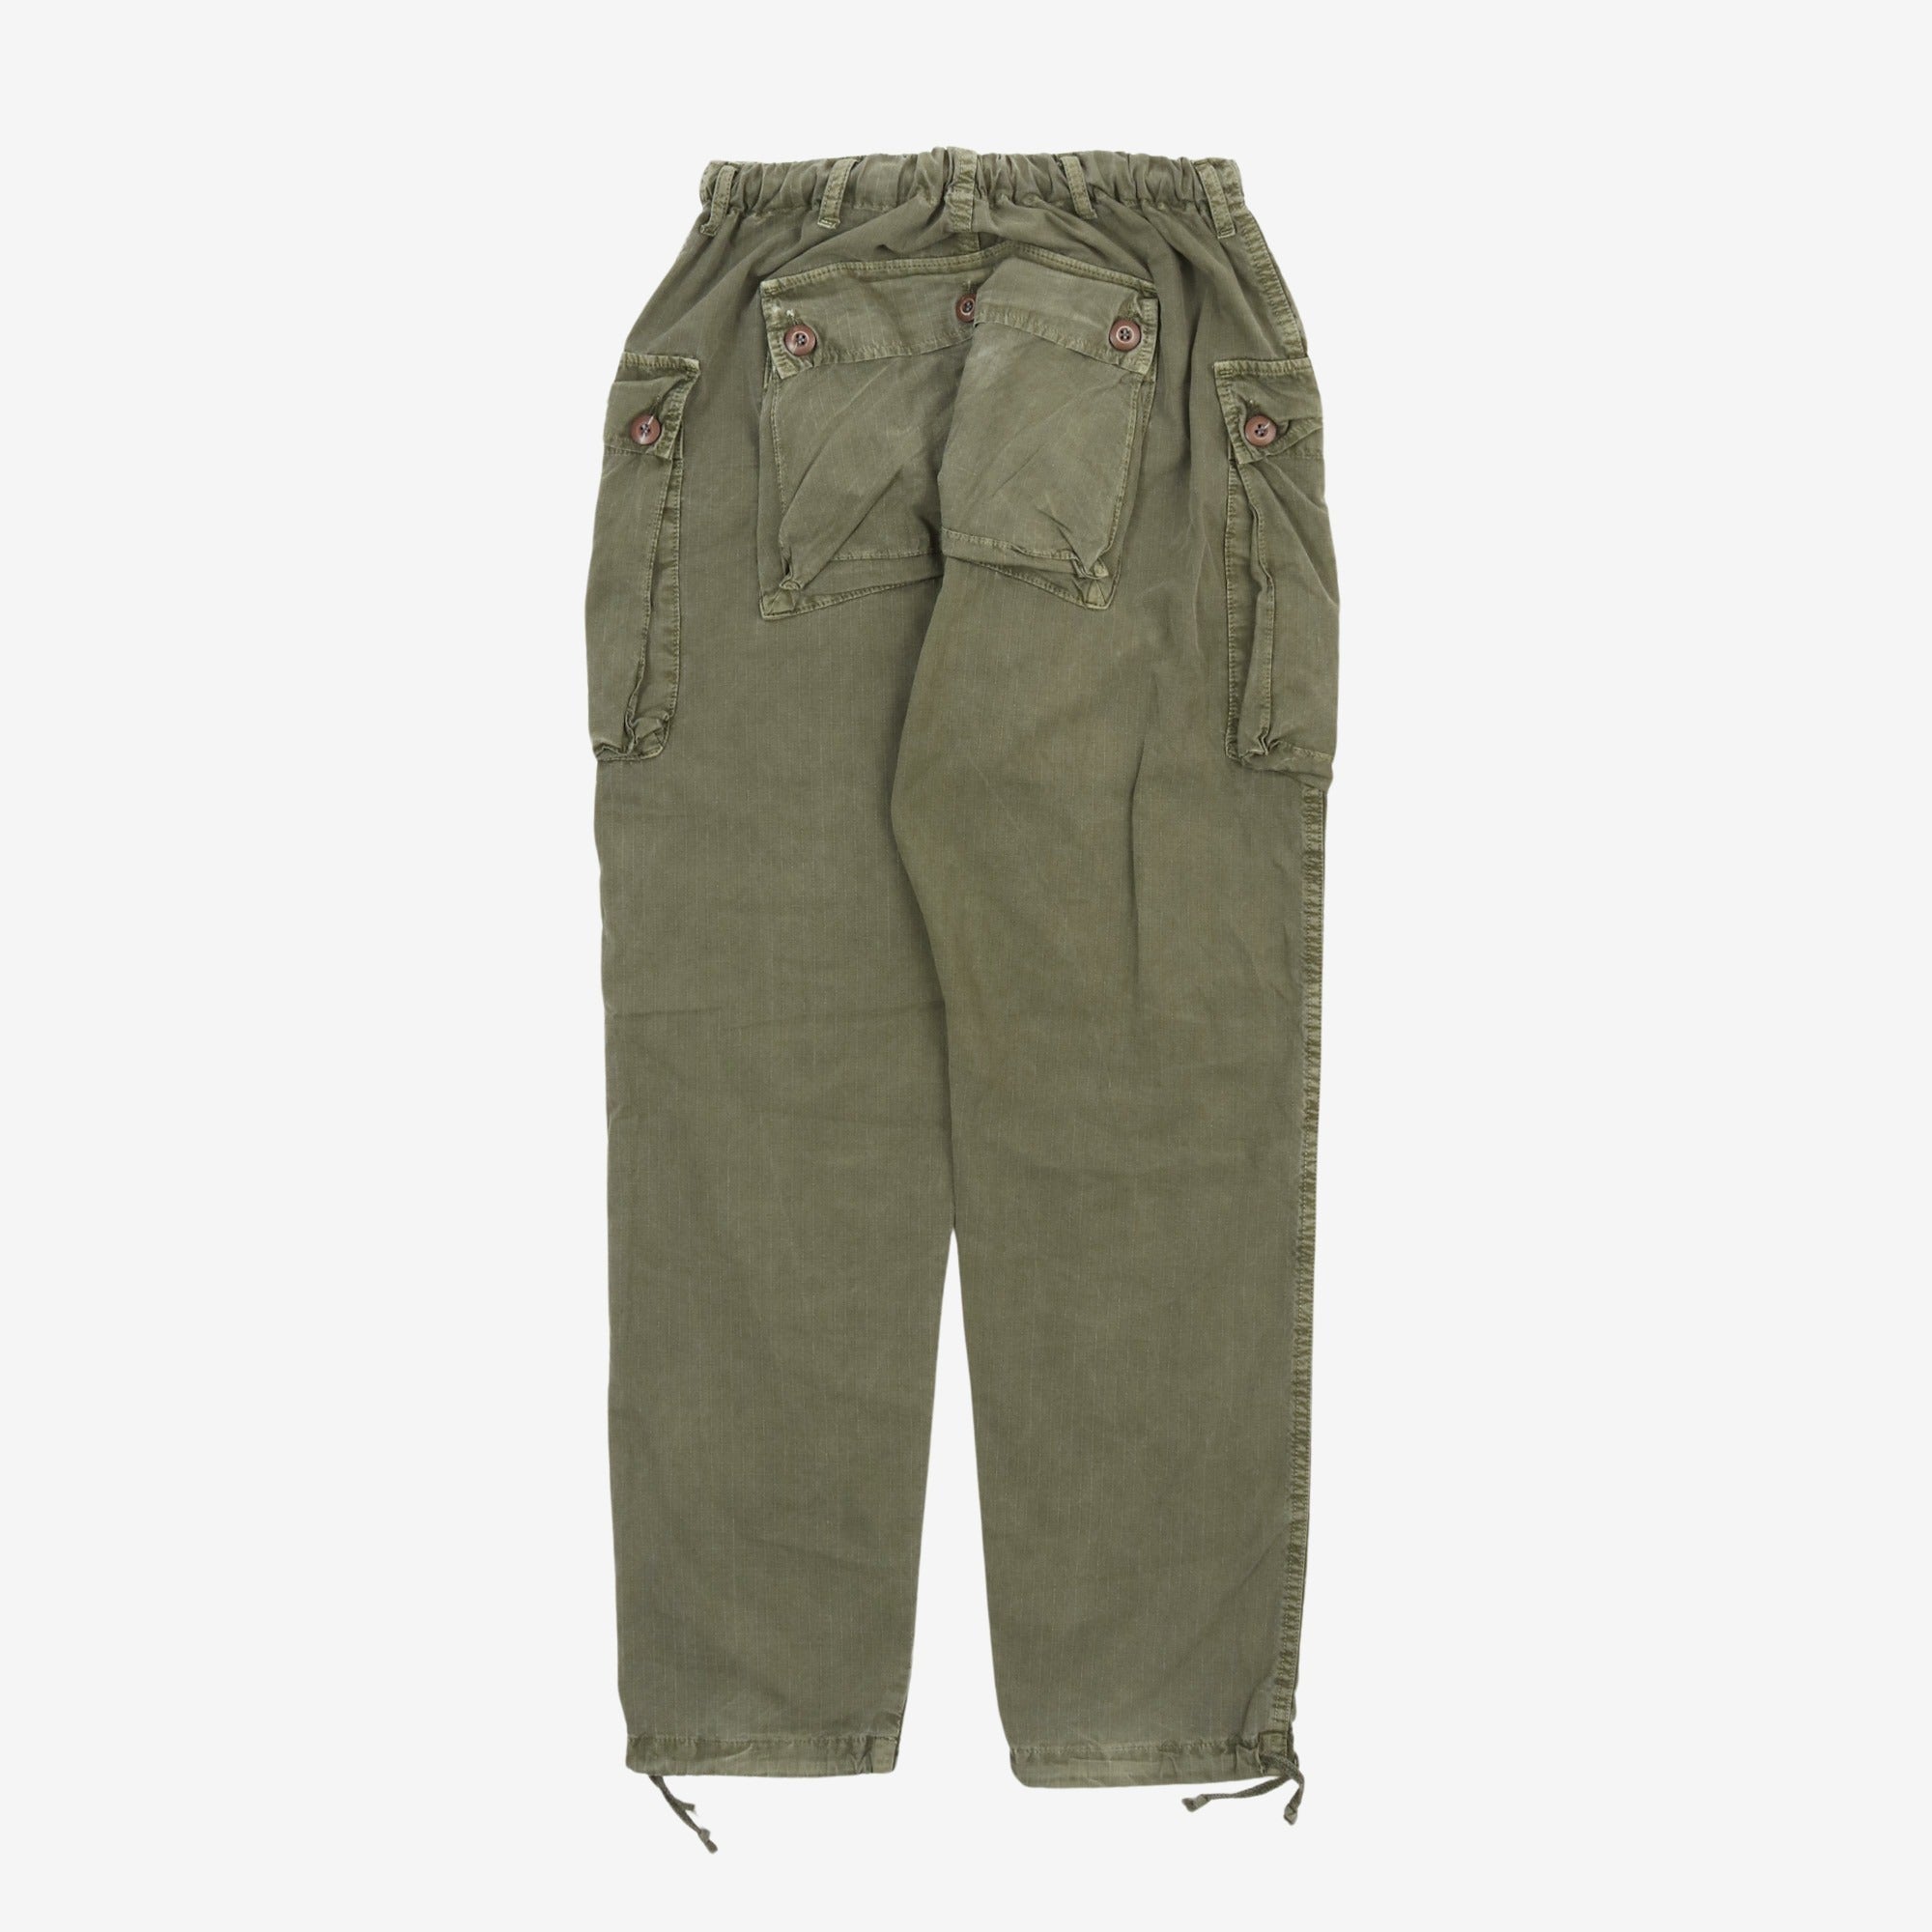 Cargo Military trousers (28W X 28L)